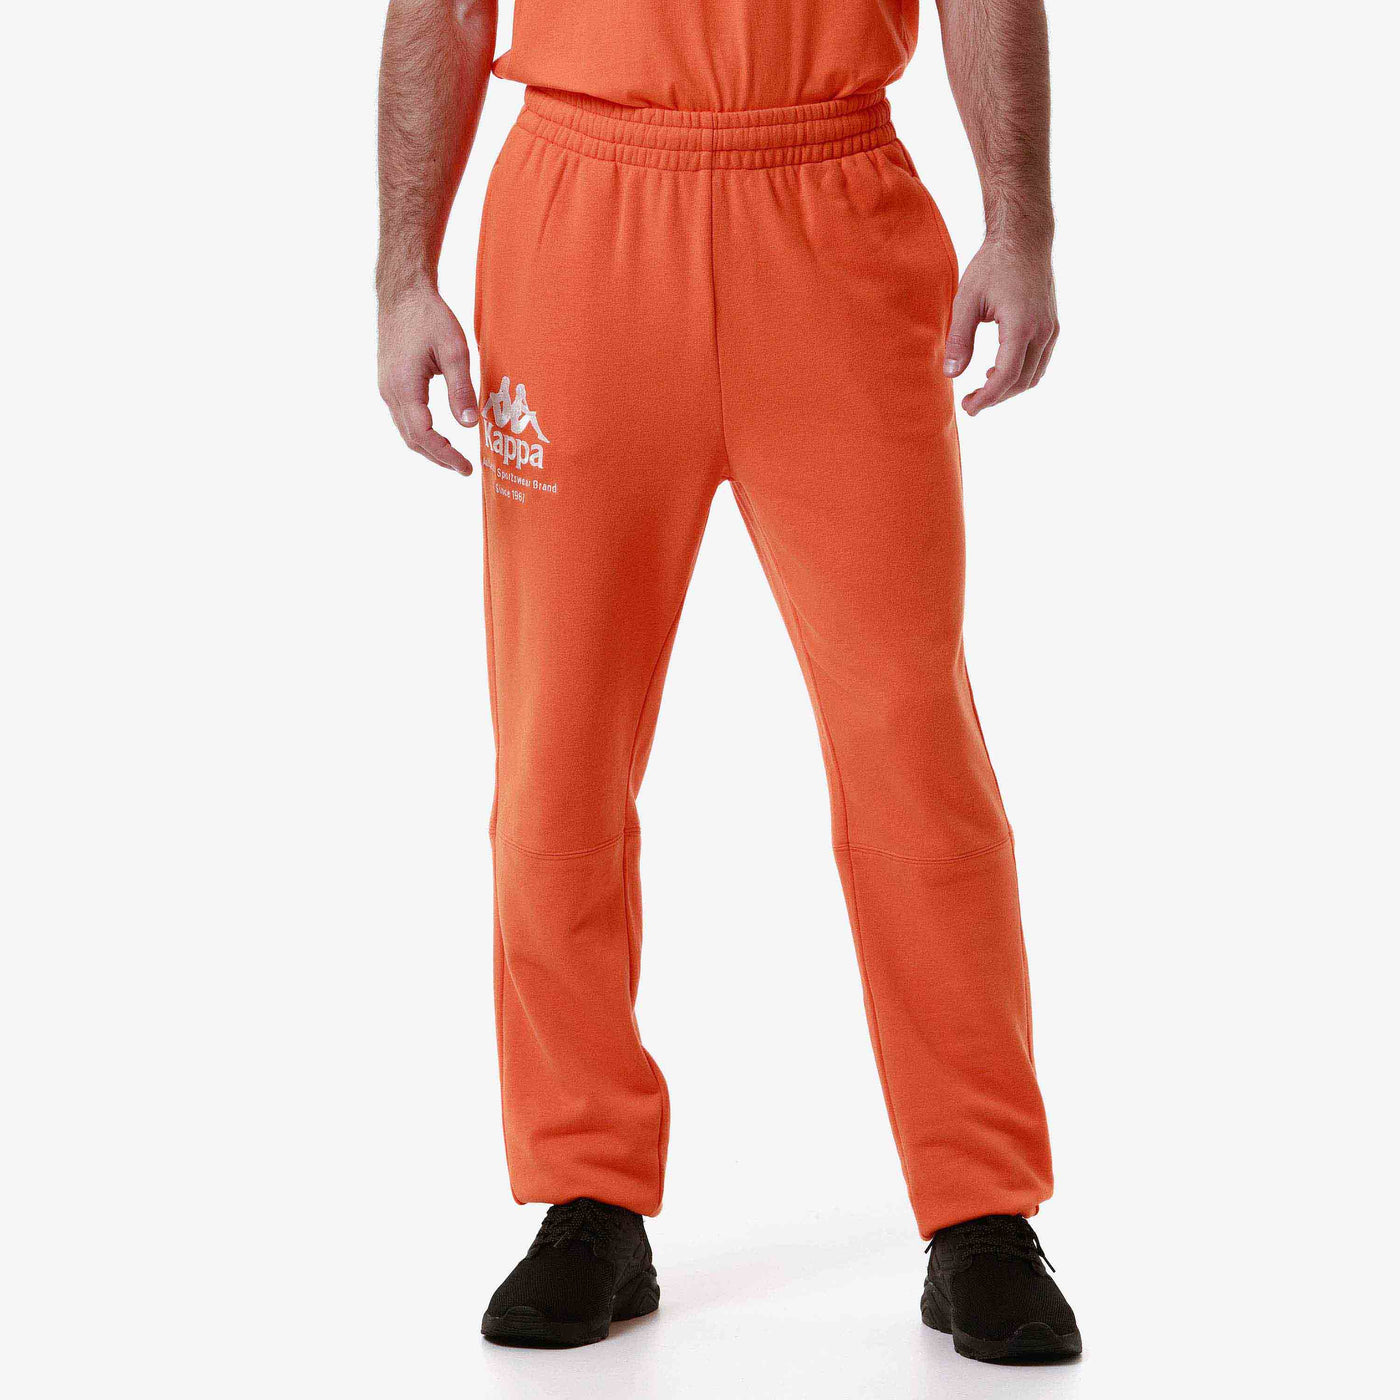 Jogging Authentic Giova Orange Homme